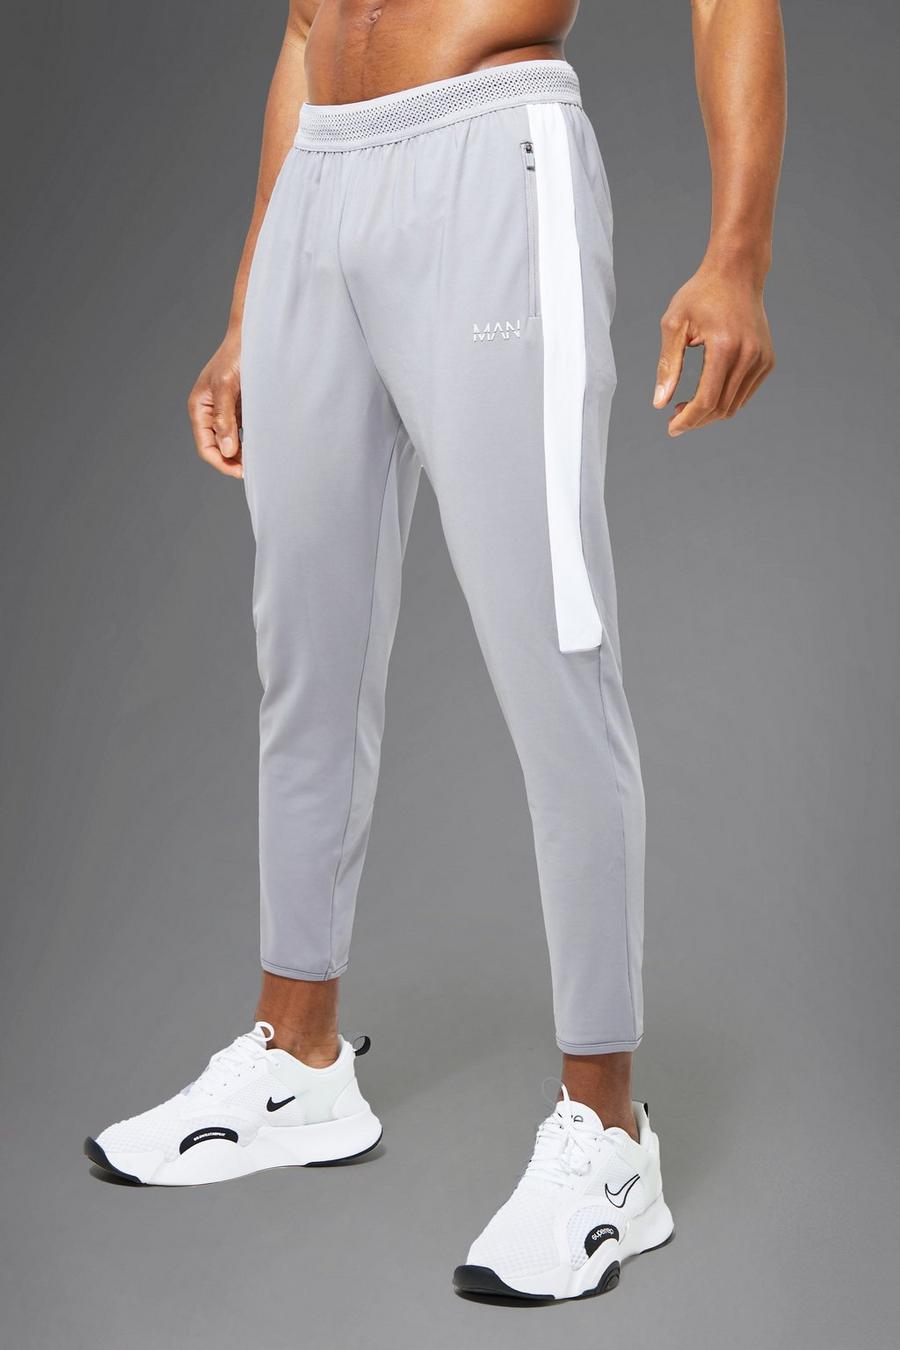 Grey grigio מכנסי ריצה קרופ ספורטיביים עם פאנל צדדי וכיתוב Man